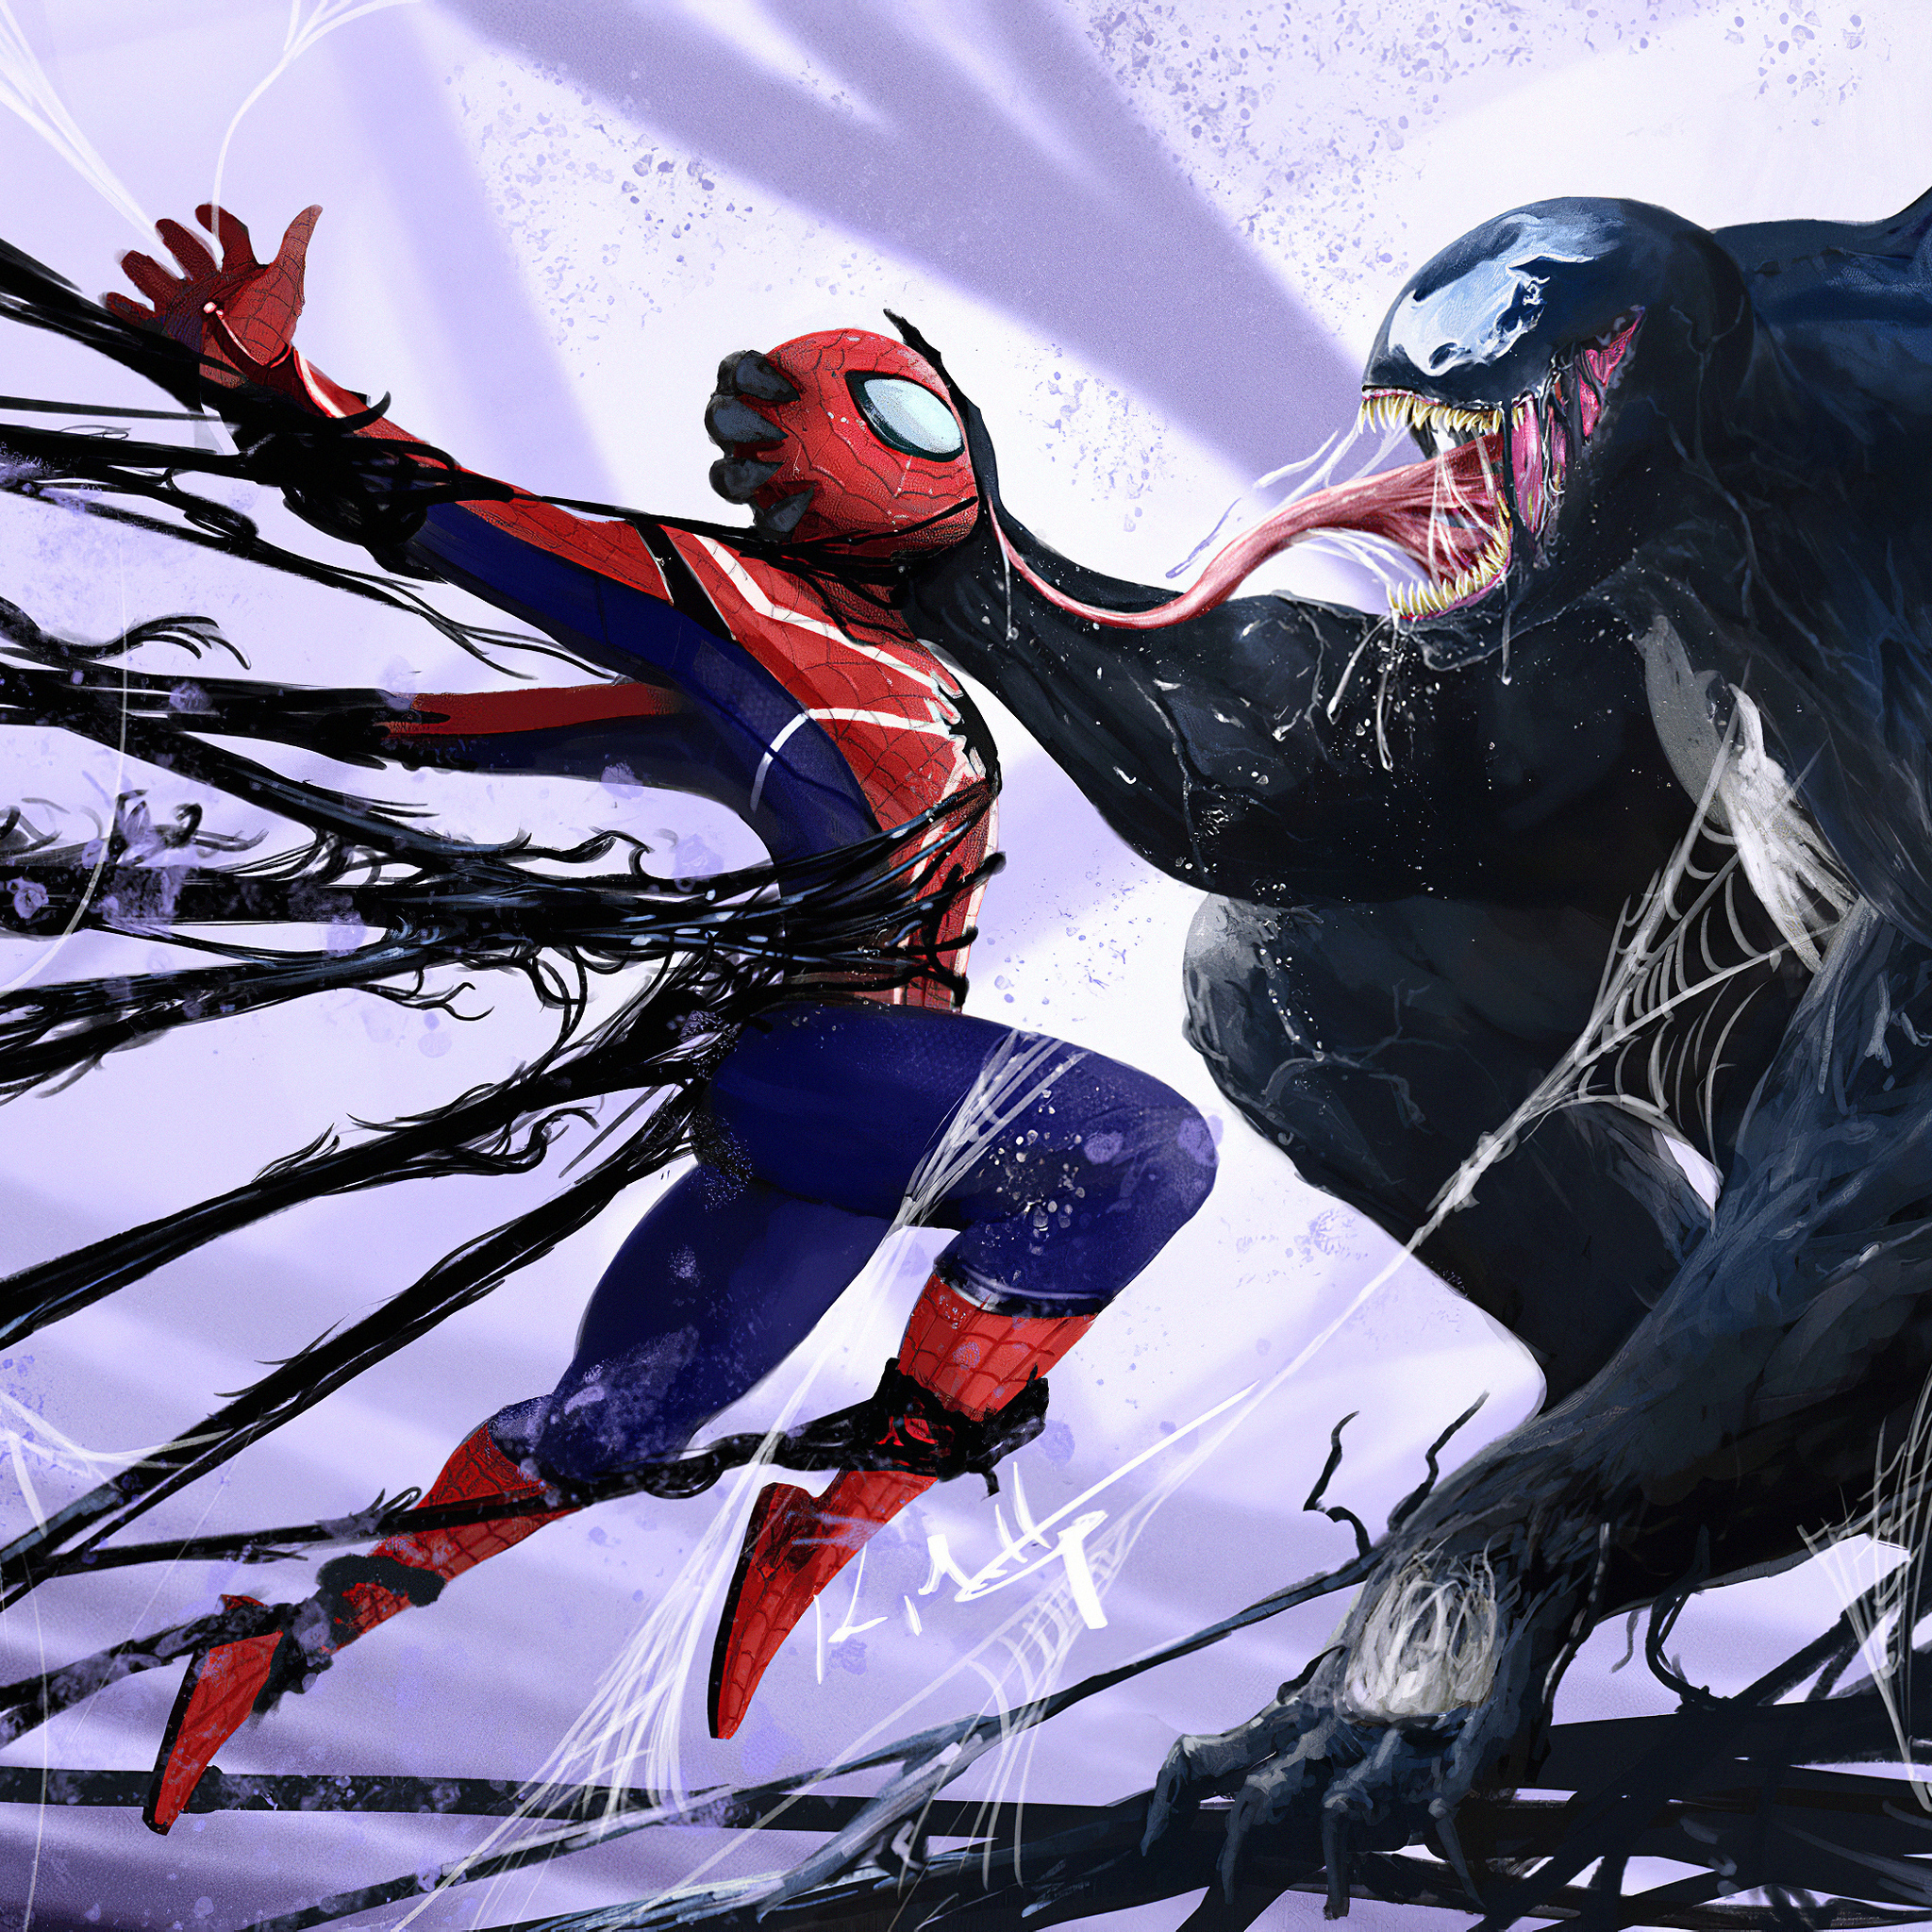 Venom Vs Spider Man In 2048x2048 Resolution. 